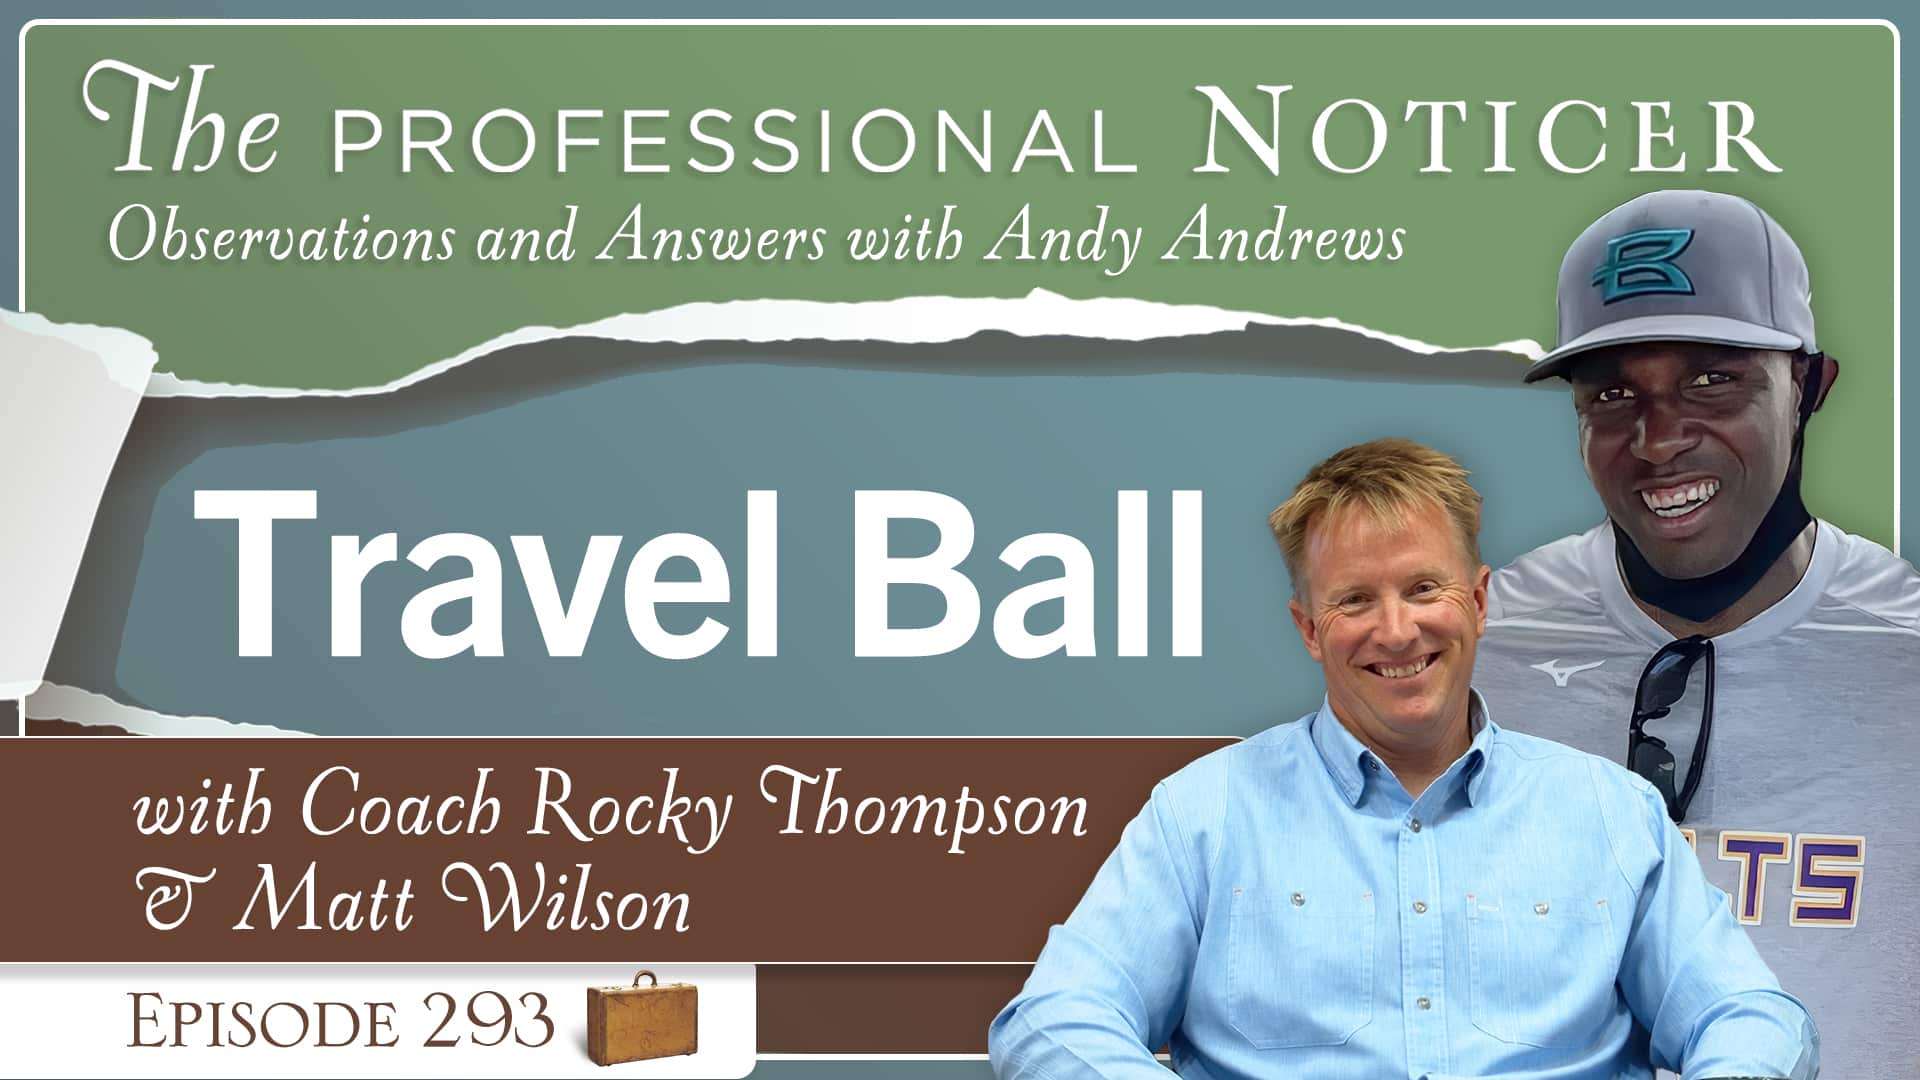 Travel Ball…with Coach Rocky Thompson and Matt Wilson